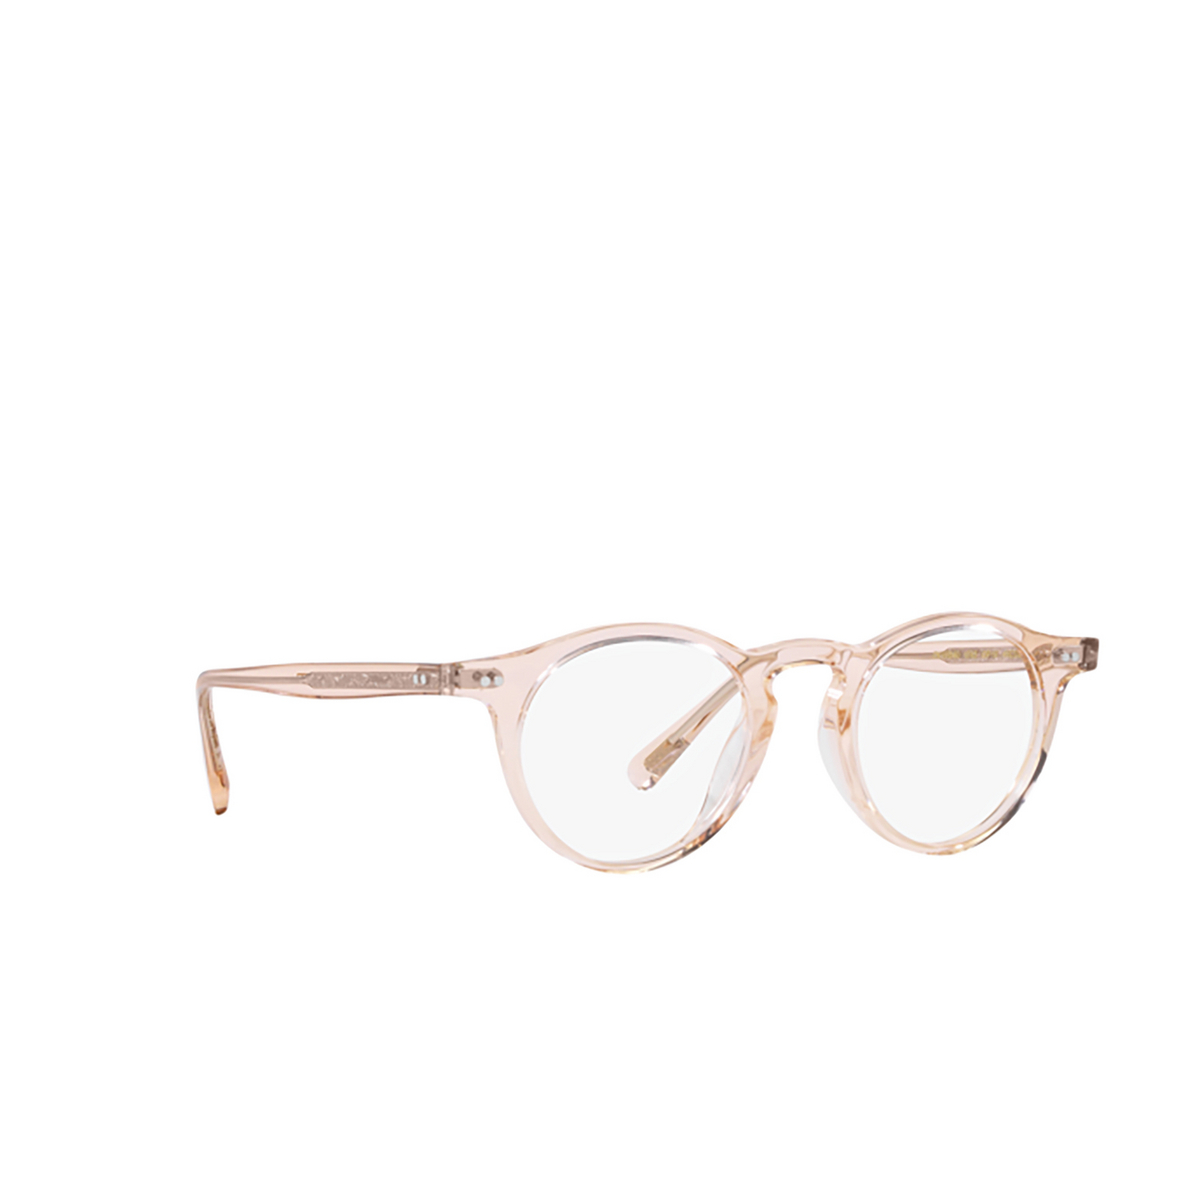 Oliver Peoples OP-13 Eyeglasses 1743 Cherry Blossom - 2/4